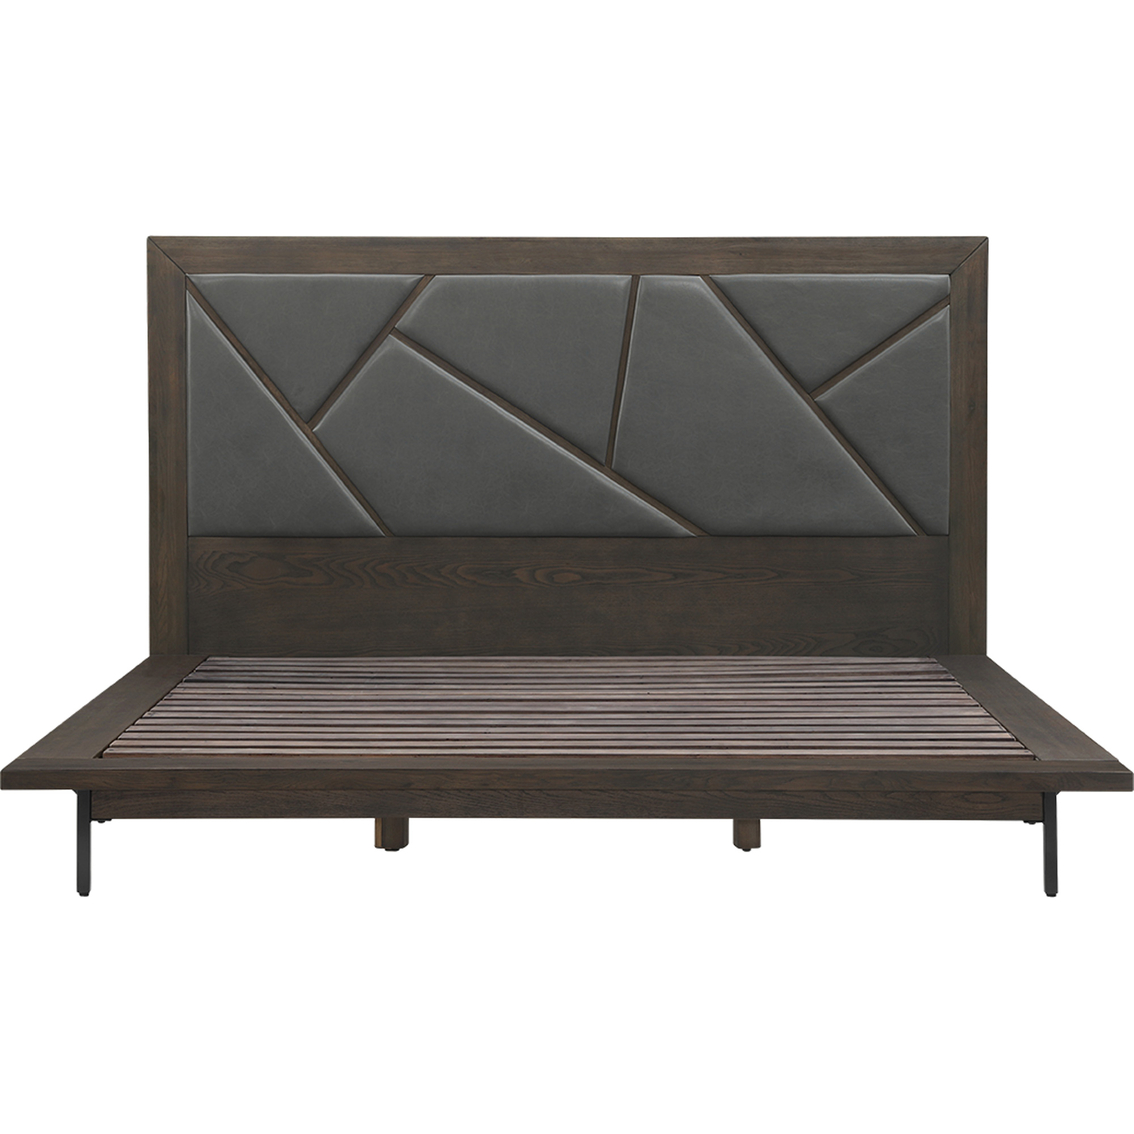 Armen Living Marquis Platform Bed Frame Faux Leather Headboard 4 pc. Bedroom Set - Image 2 of 4